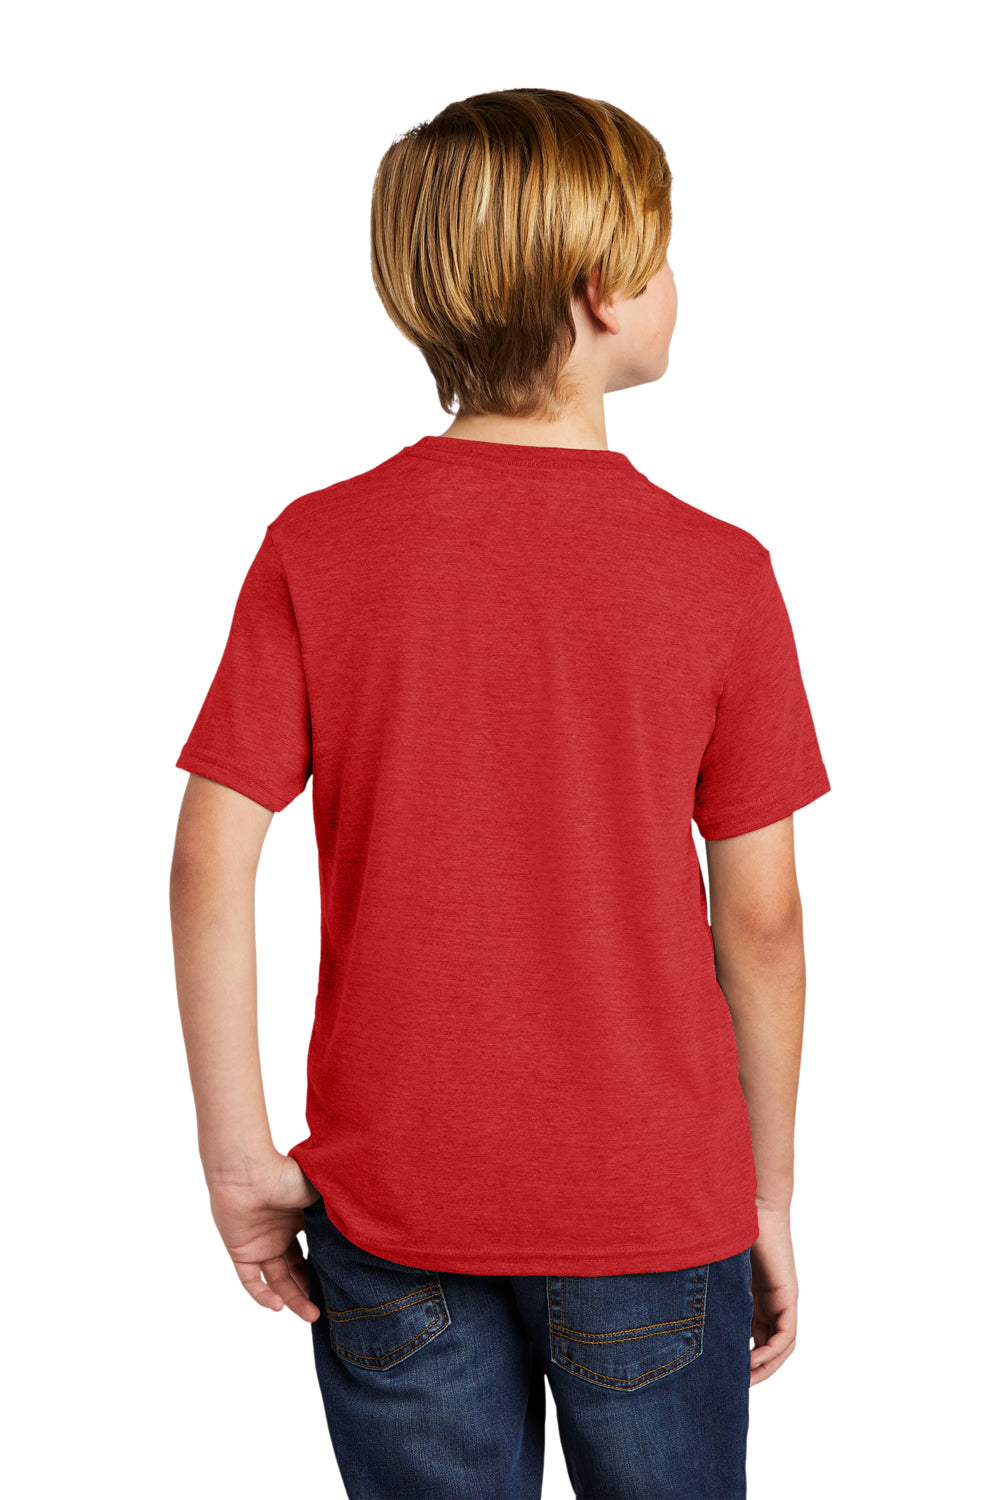 Allmade AL207 Youth Short Sleeve Crewneck T-Shirt Rise Up Red Model Back